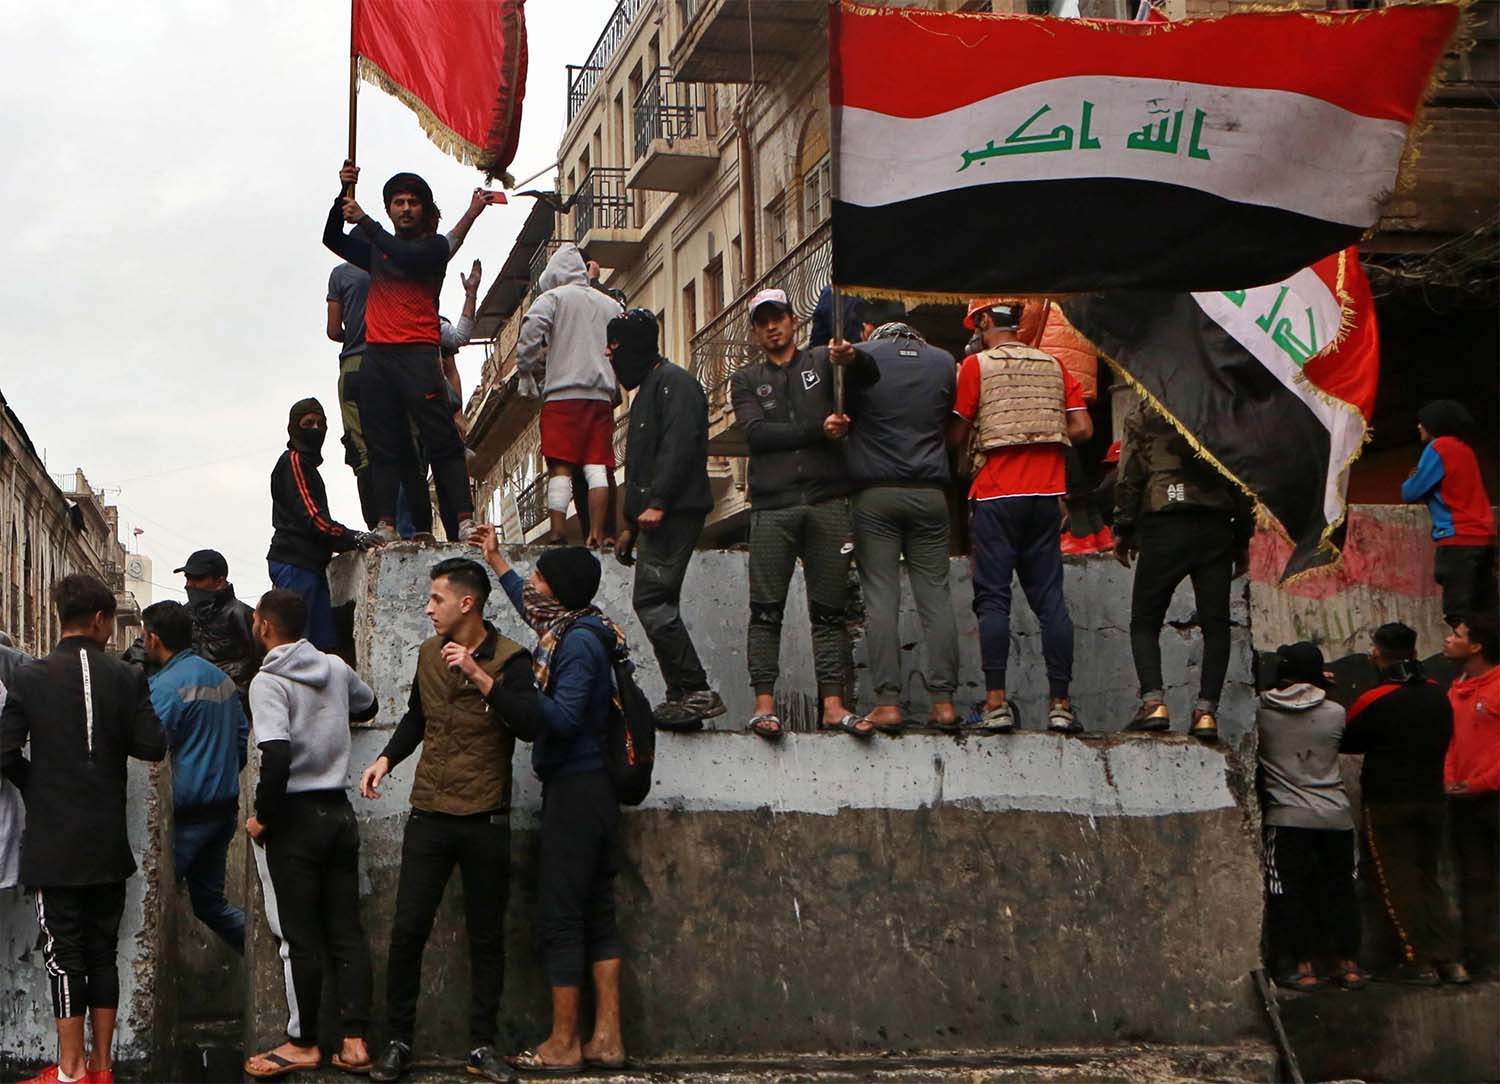 Anti-government protest continue across Iraq despite bloody crackdown